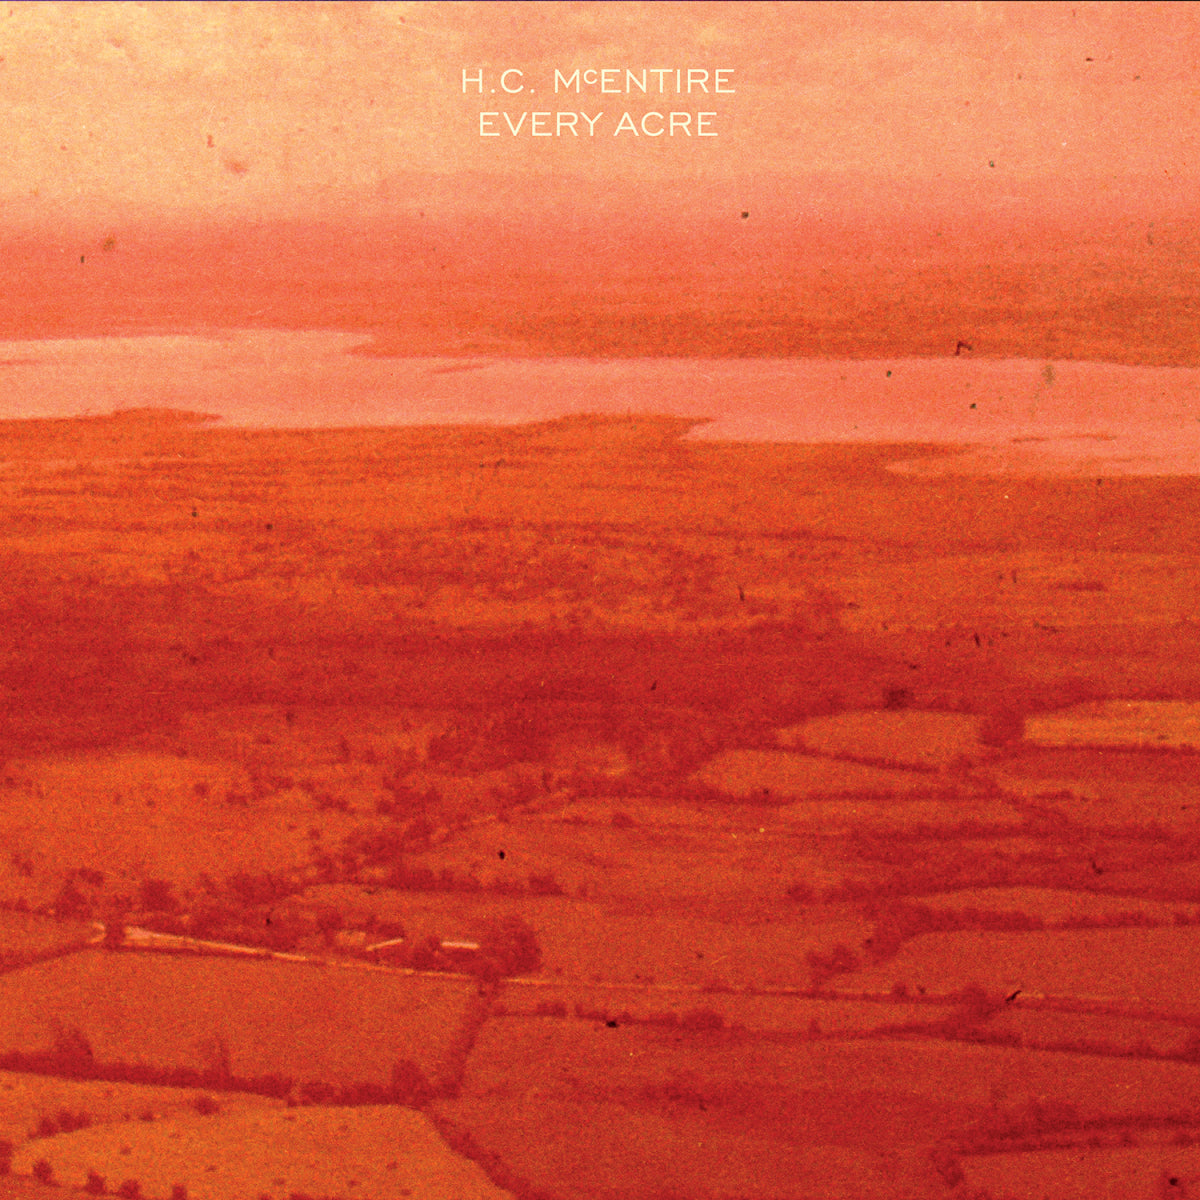 H.C. McENTIRE - EVERY ACRE Vinyl LP